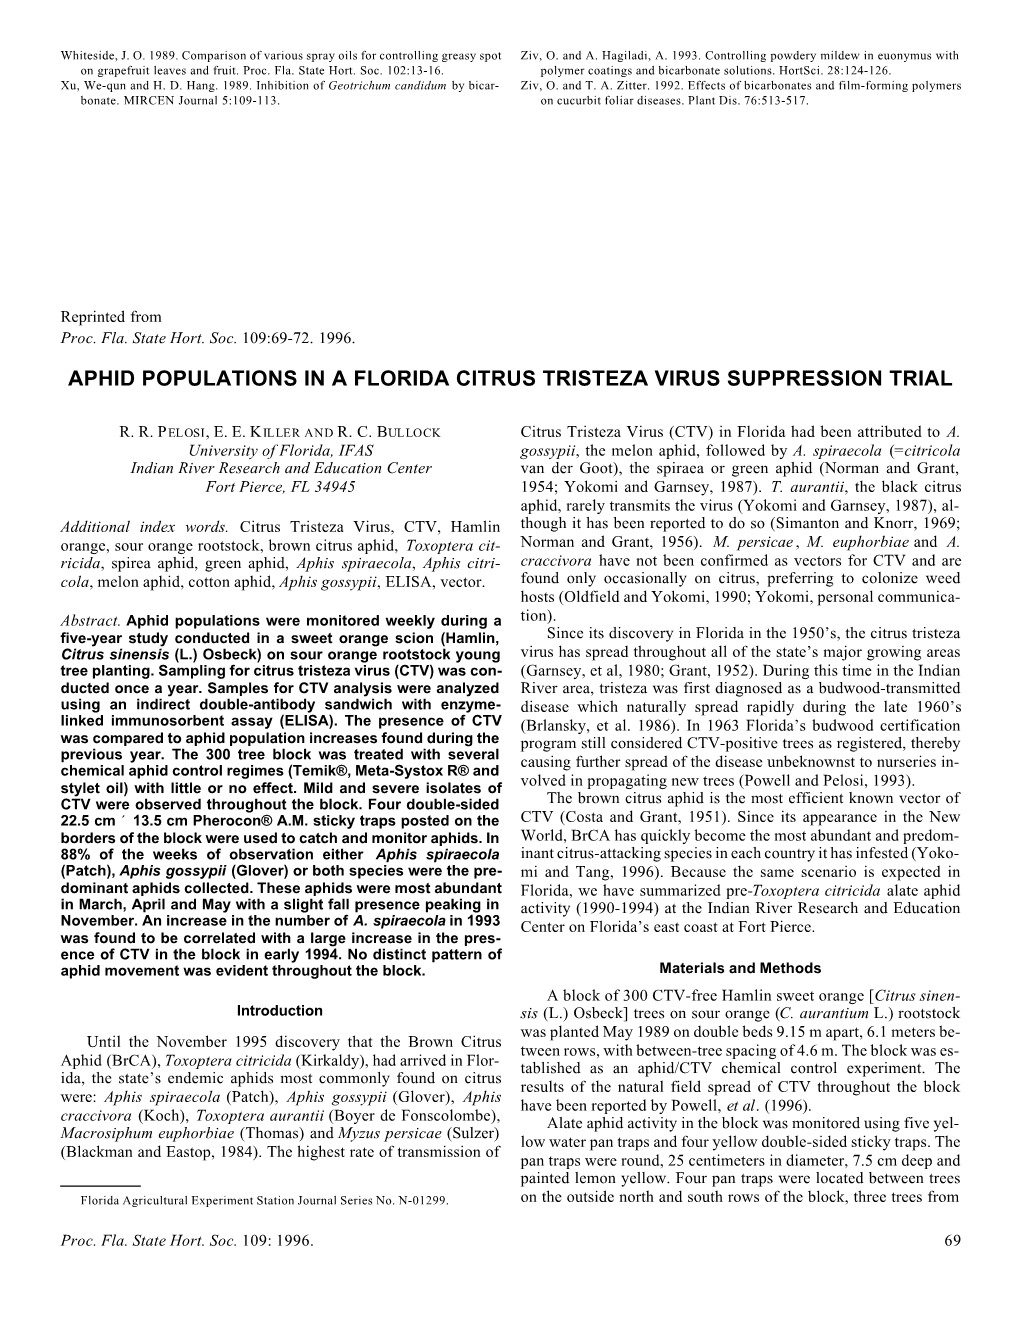 Aphid Populations in a Florida Citrus Tristeza Virus Suppression Trial